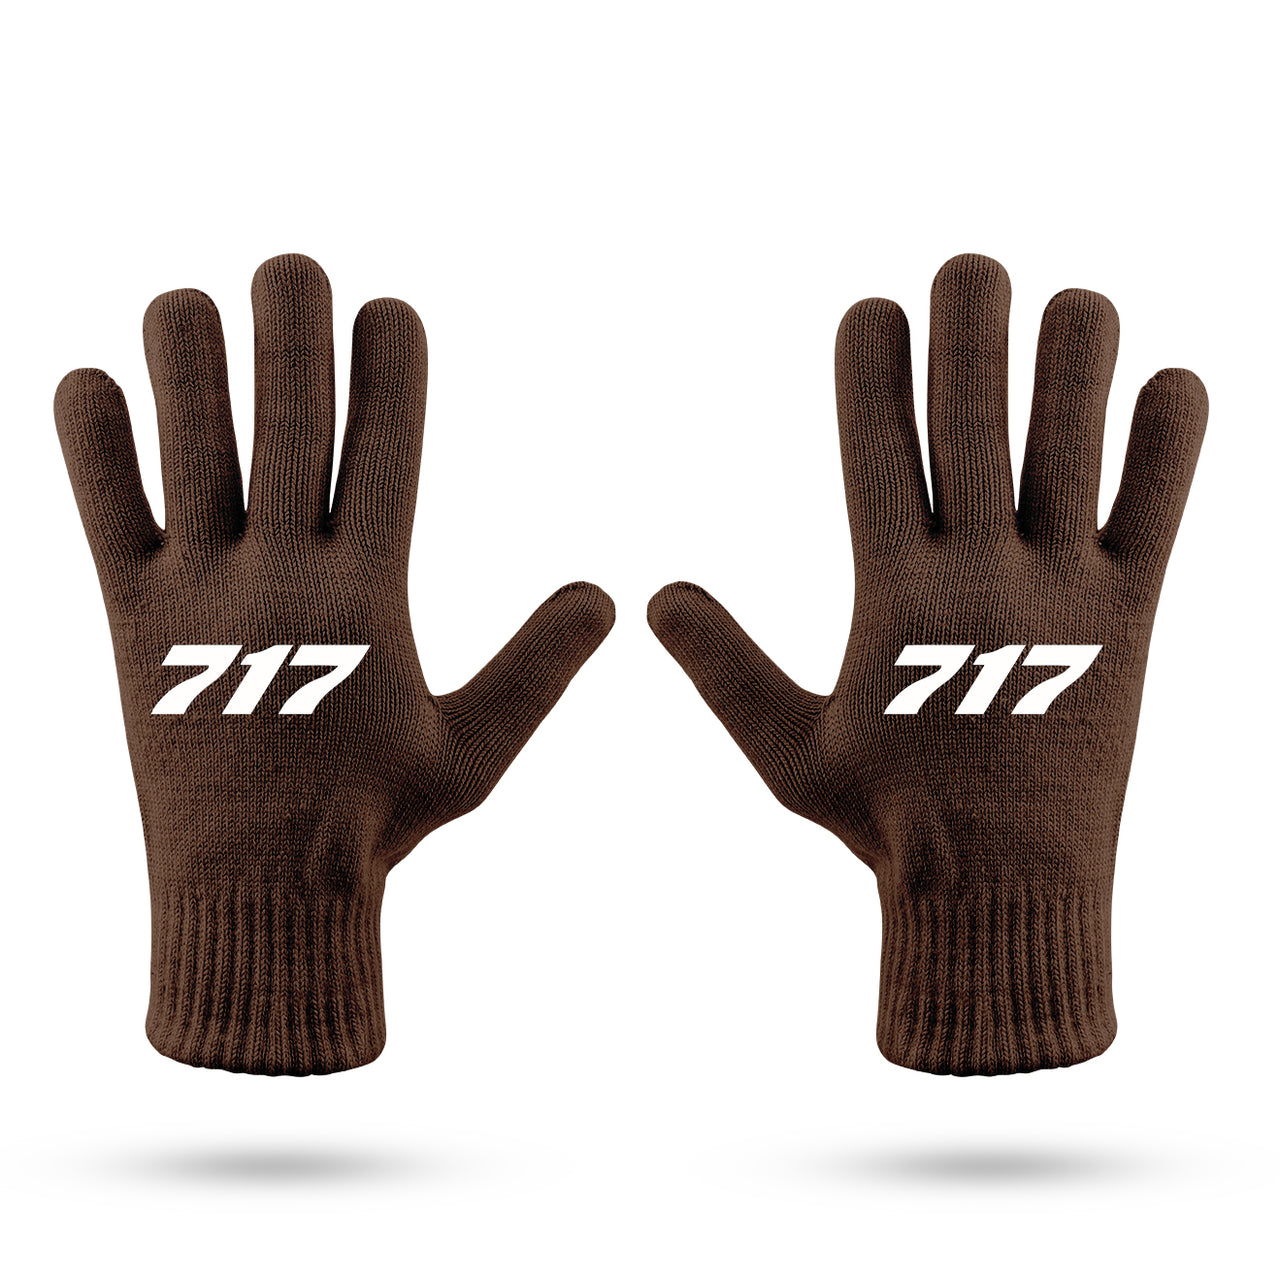 717 Flat Text Designed Gloves